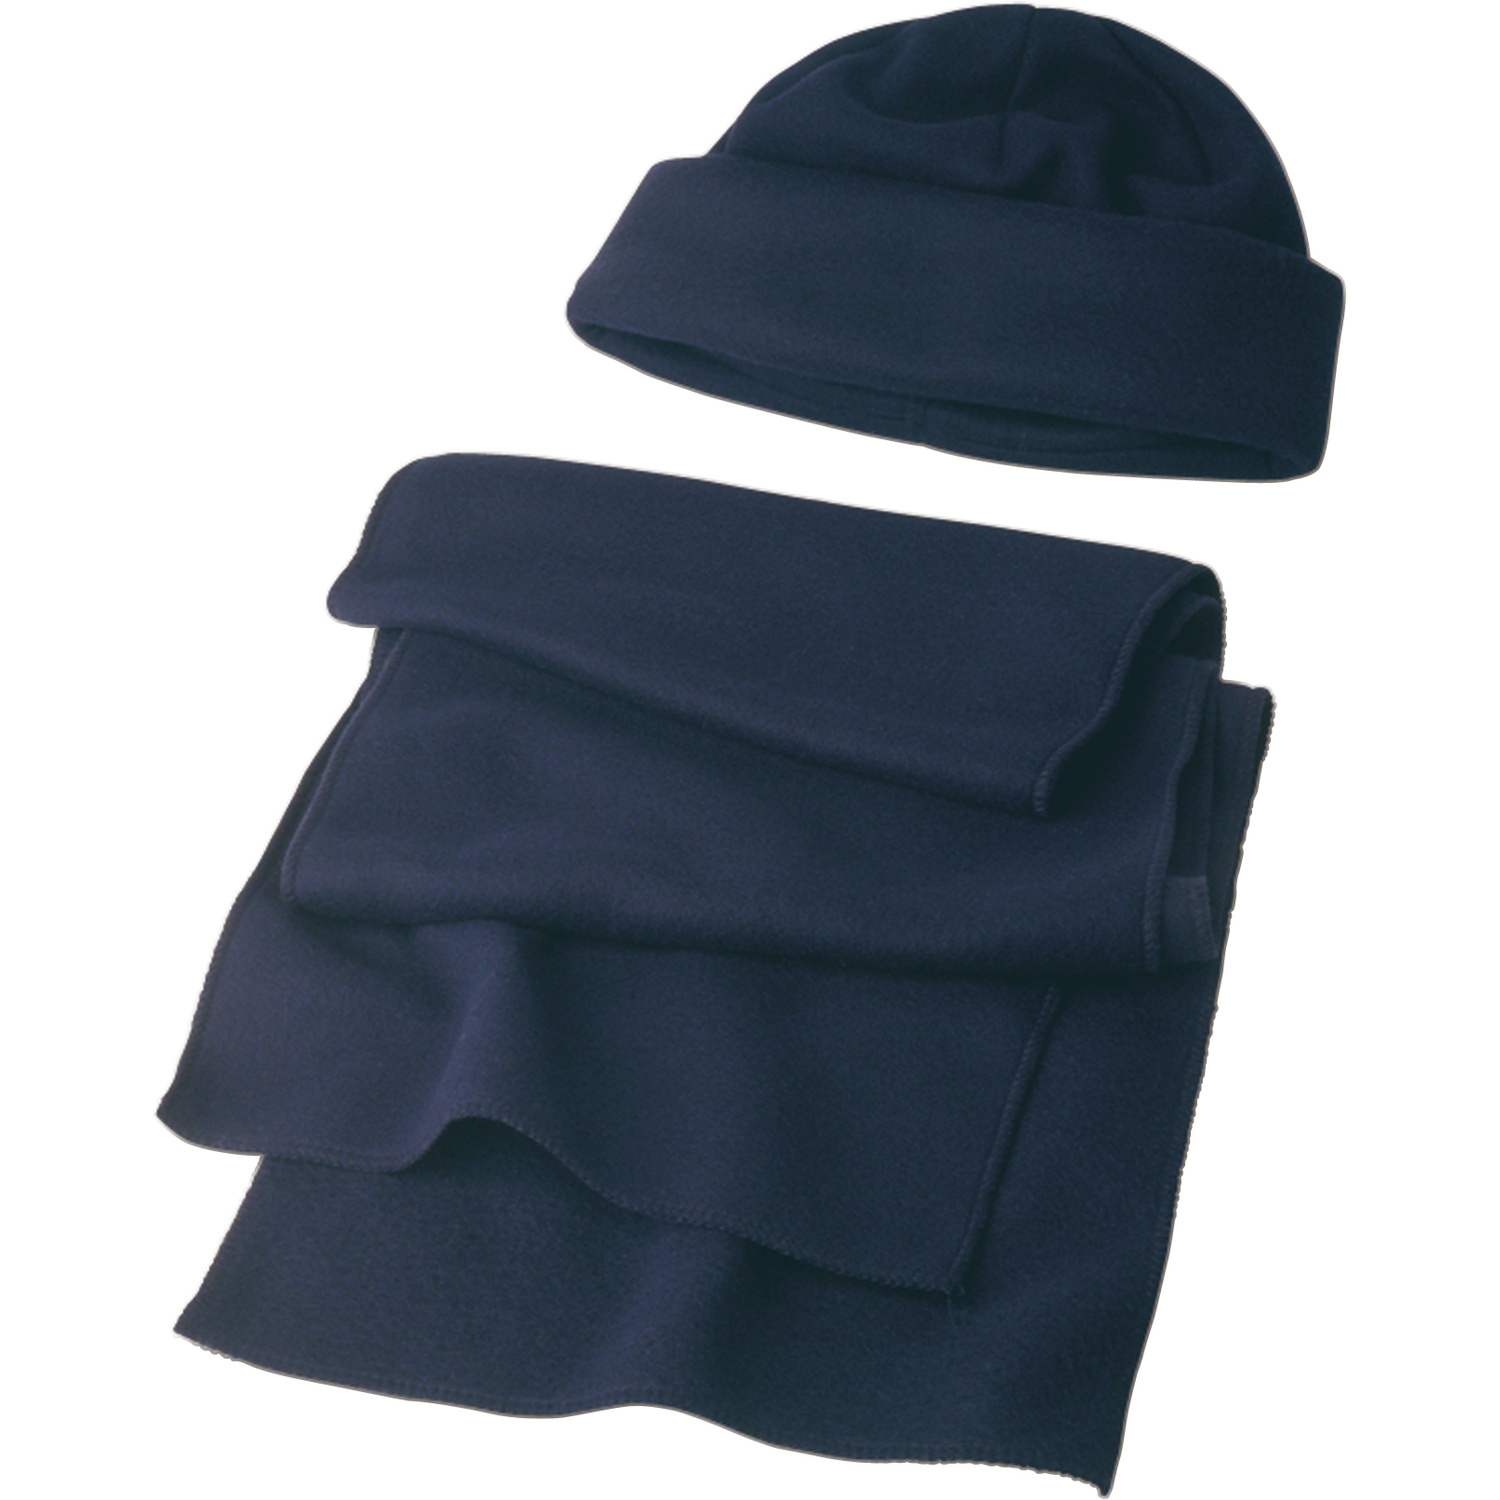 001745 005999999 3d045 frt pro01 fal - Fleece cap and scarf